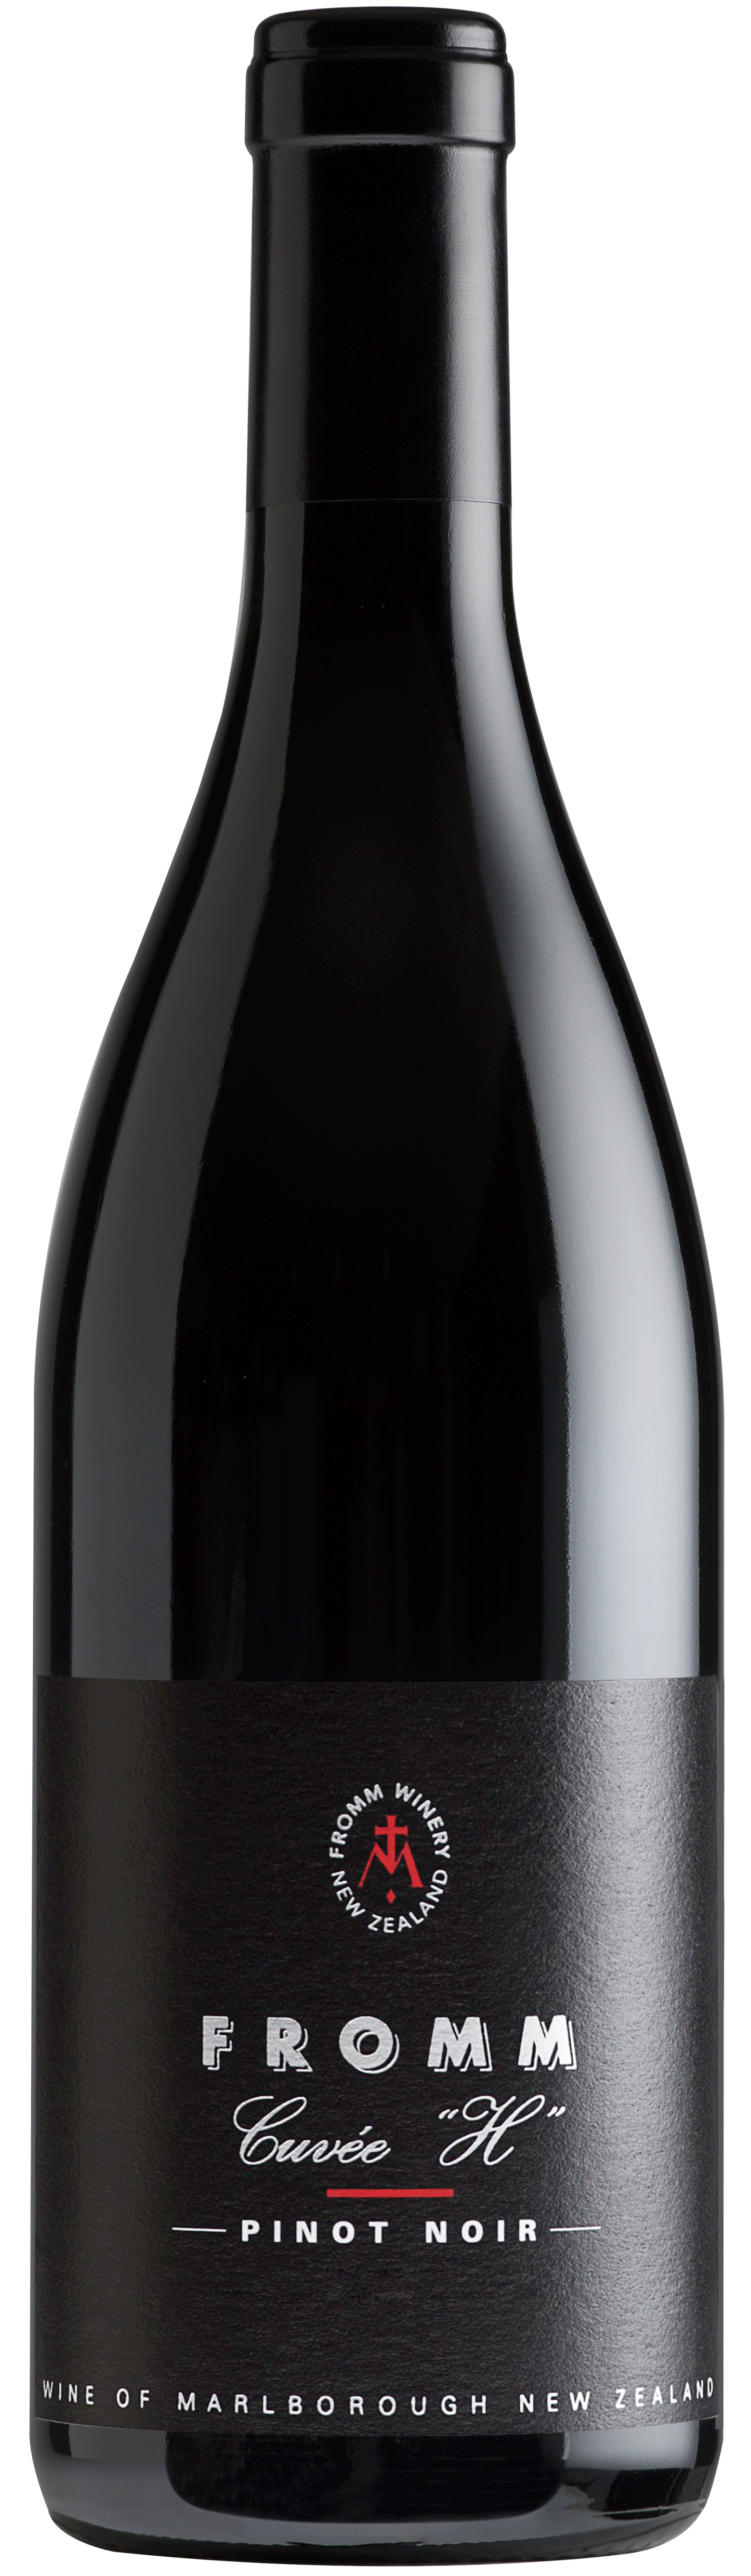 FROMM Pinot Noir Cuvée "H" 2018 - Magnum